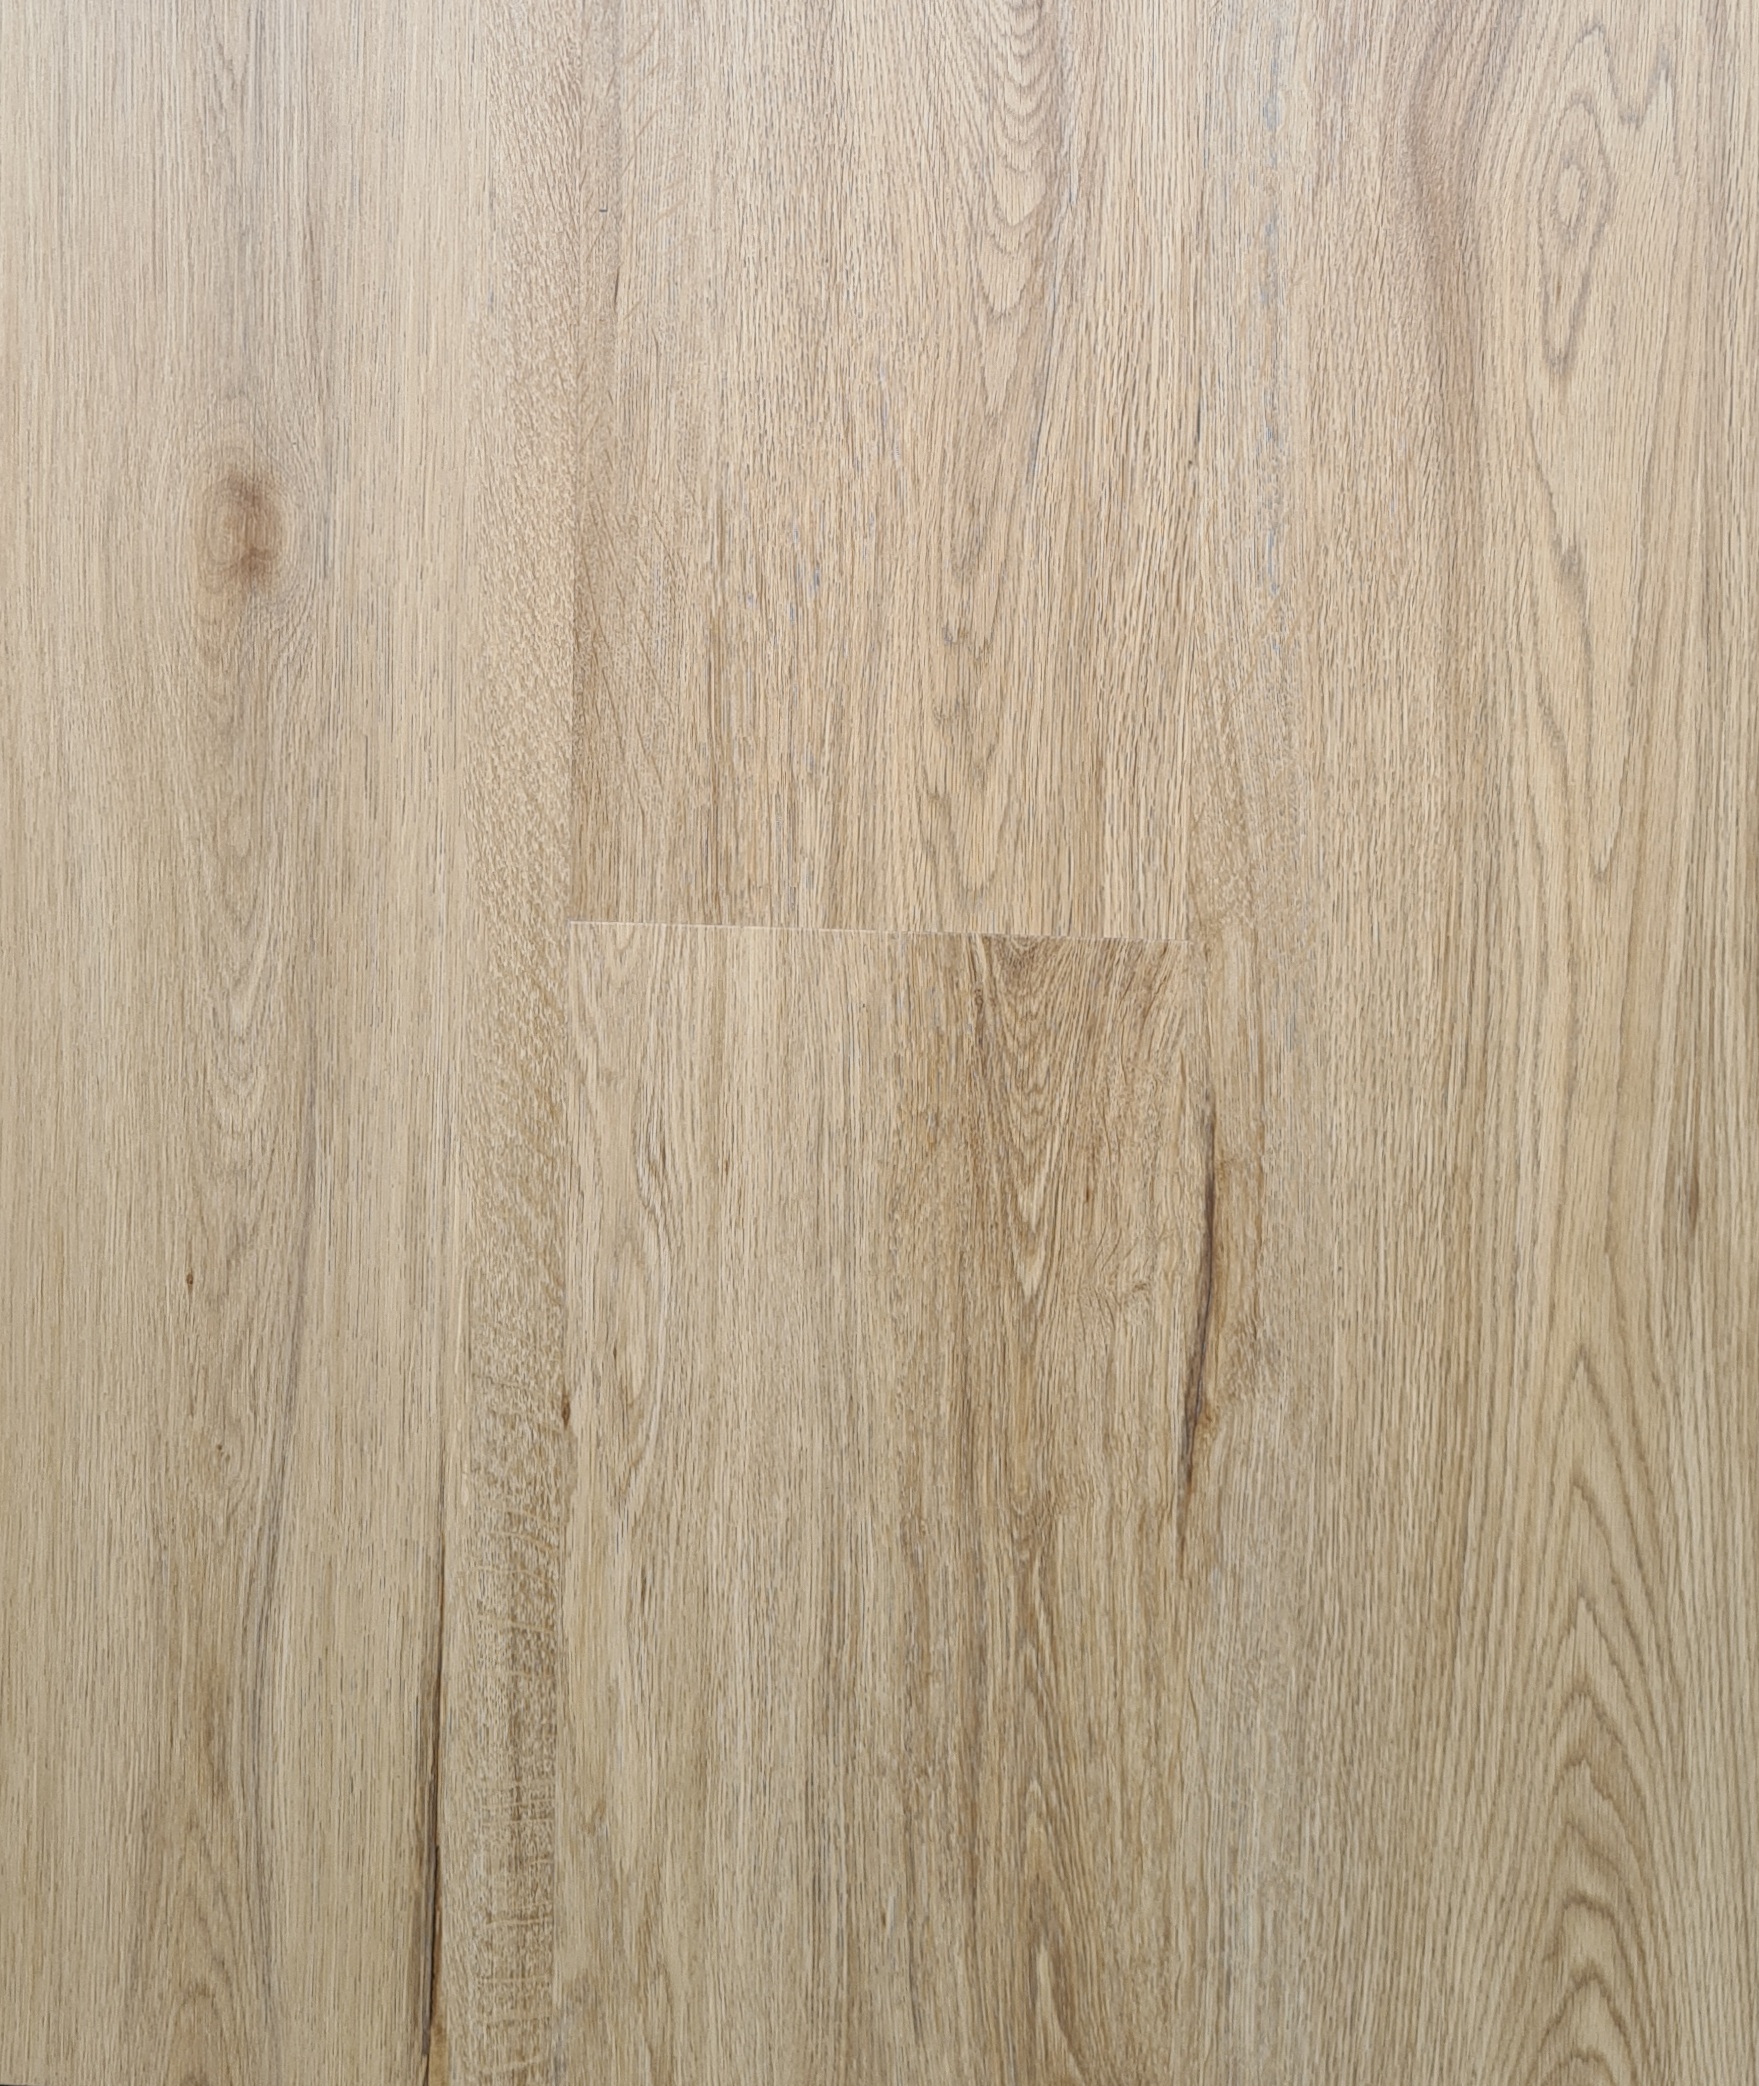 Harmony Natural Oak Hybrid Flooring